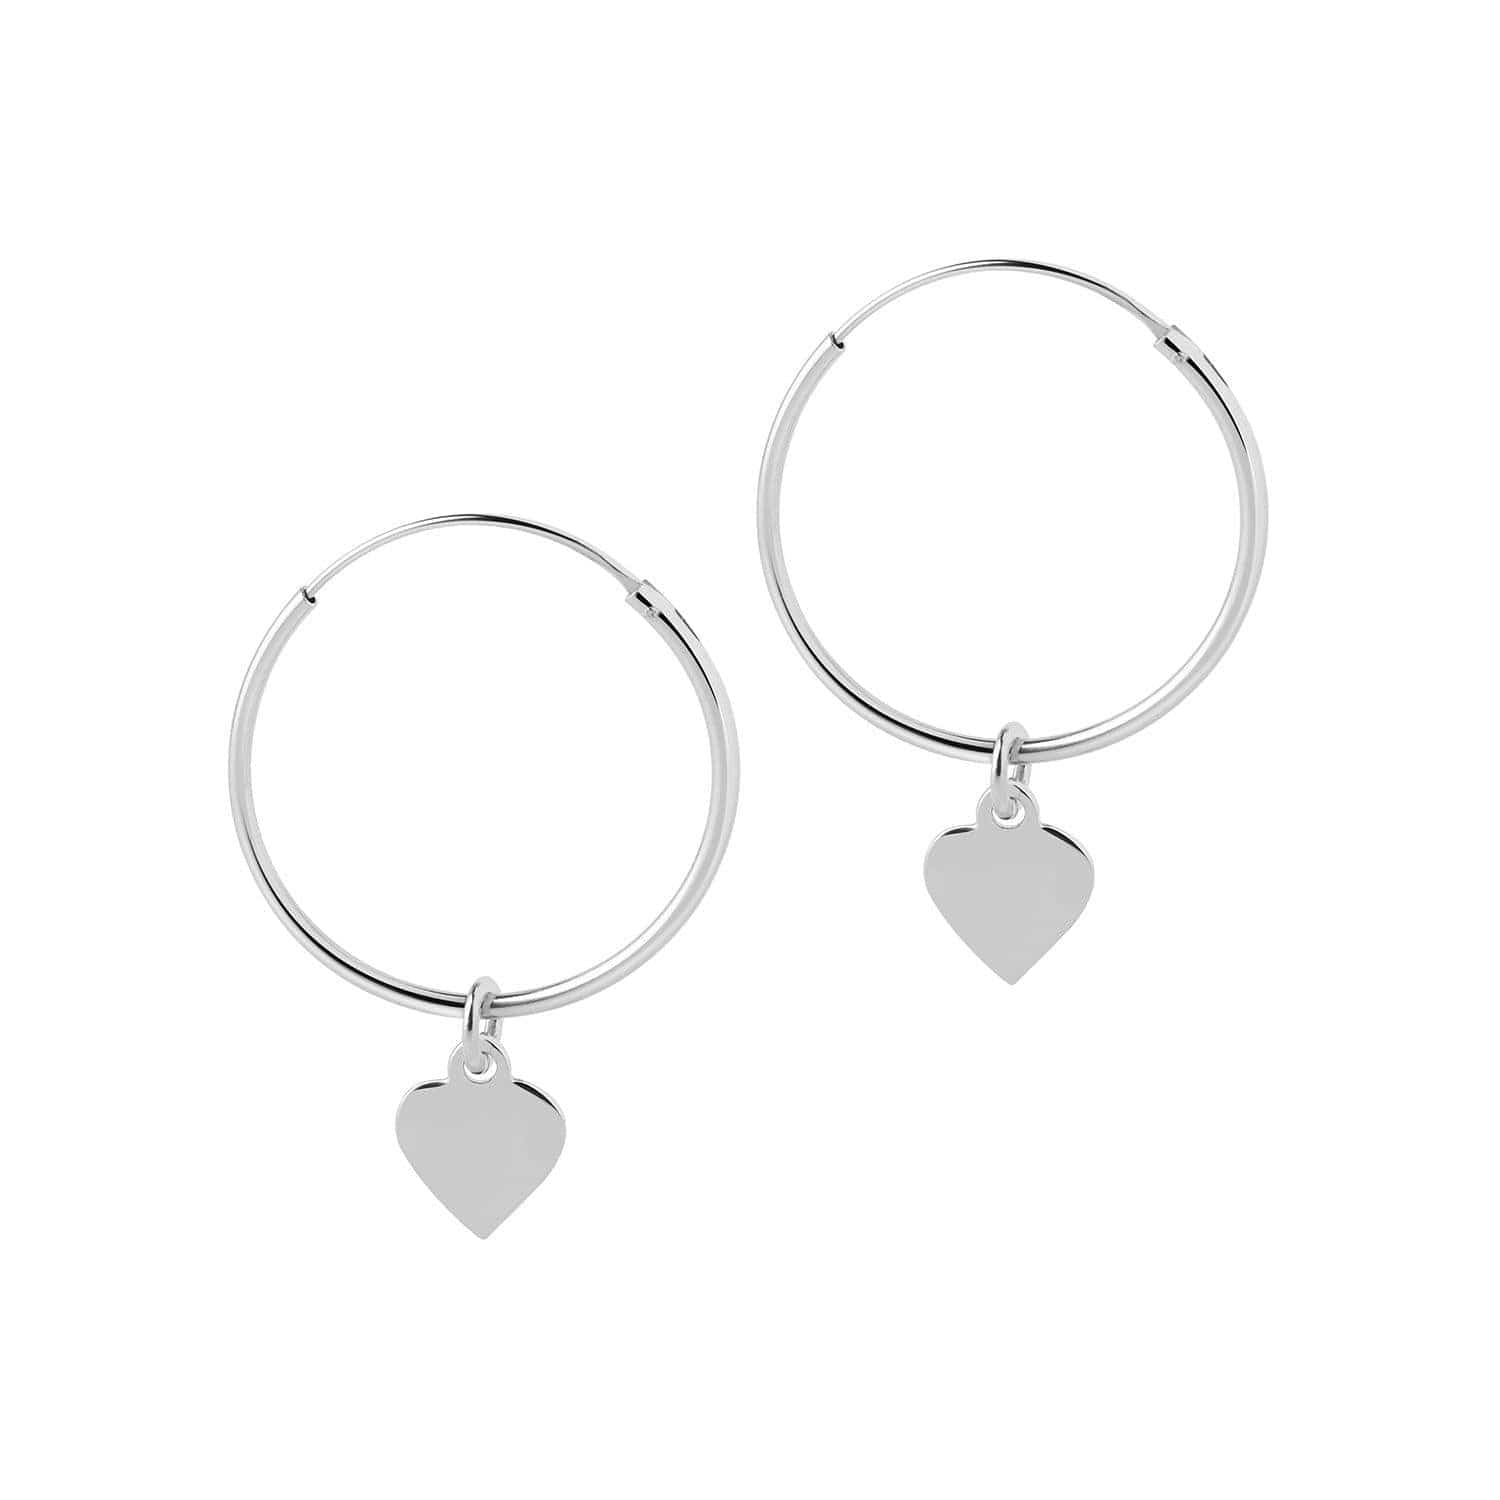 Hoop Earrings with Pendant Heart Silver 22MM